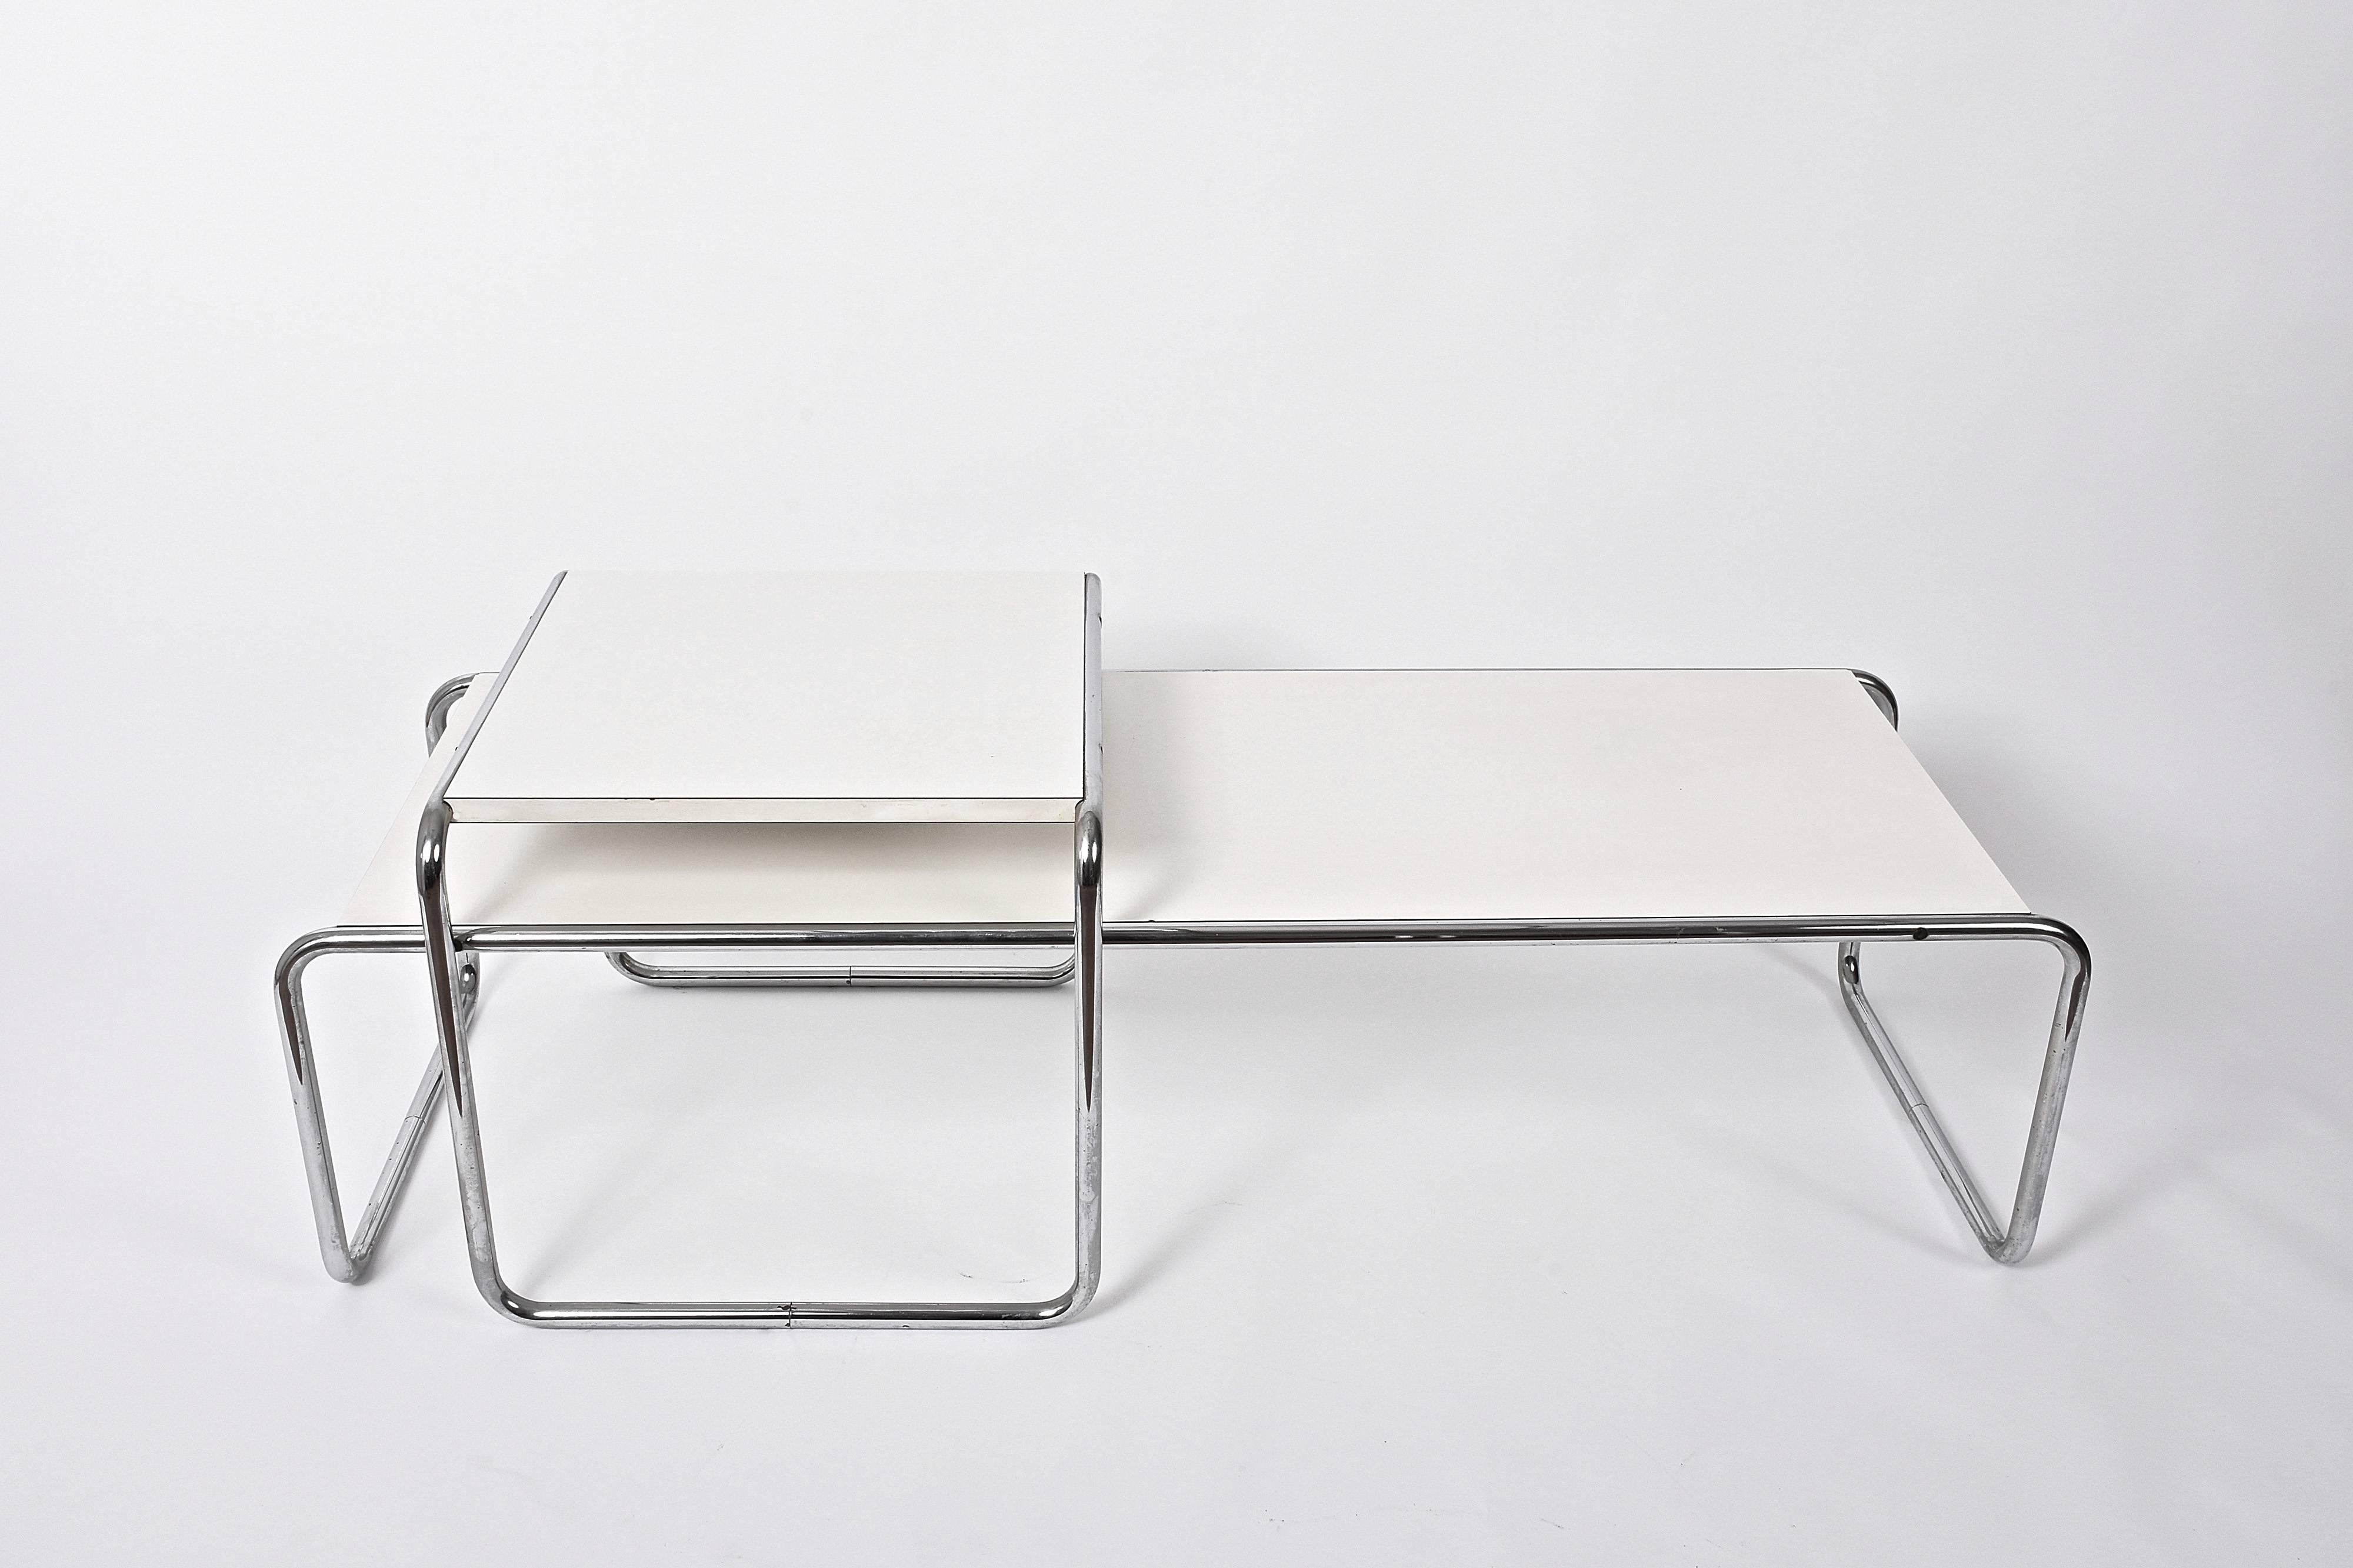 Marcel Breuer white laminated wood and steel 'Laccio' side table, Bauhaus
Measurements: Small cm 48 x 55 H 44
Measurements: Large cm 137 x 48 H 35.